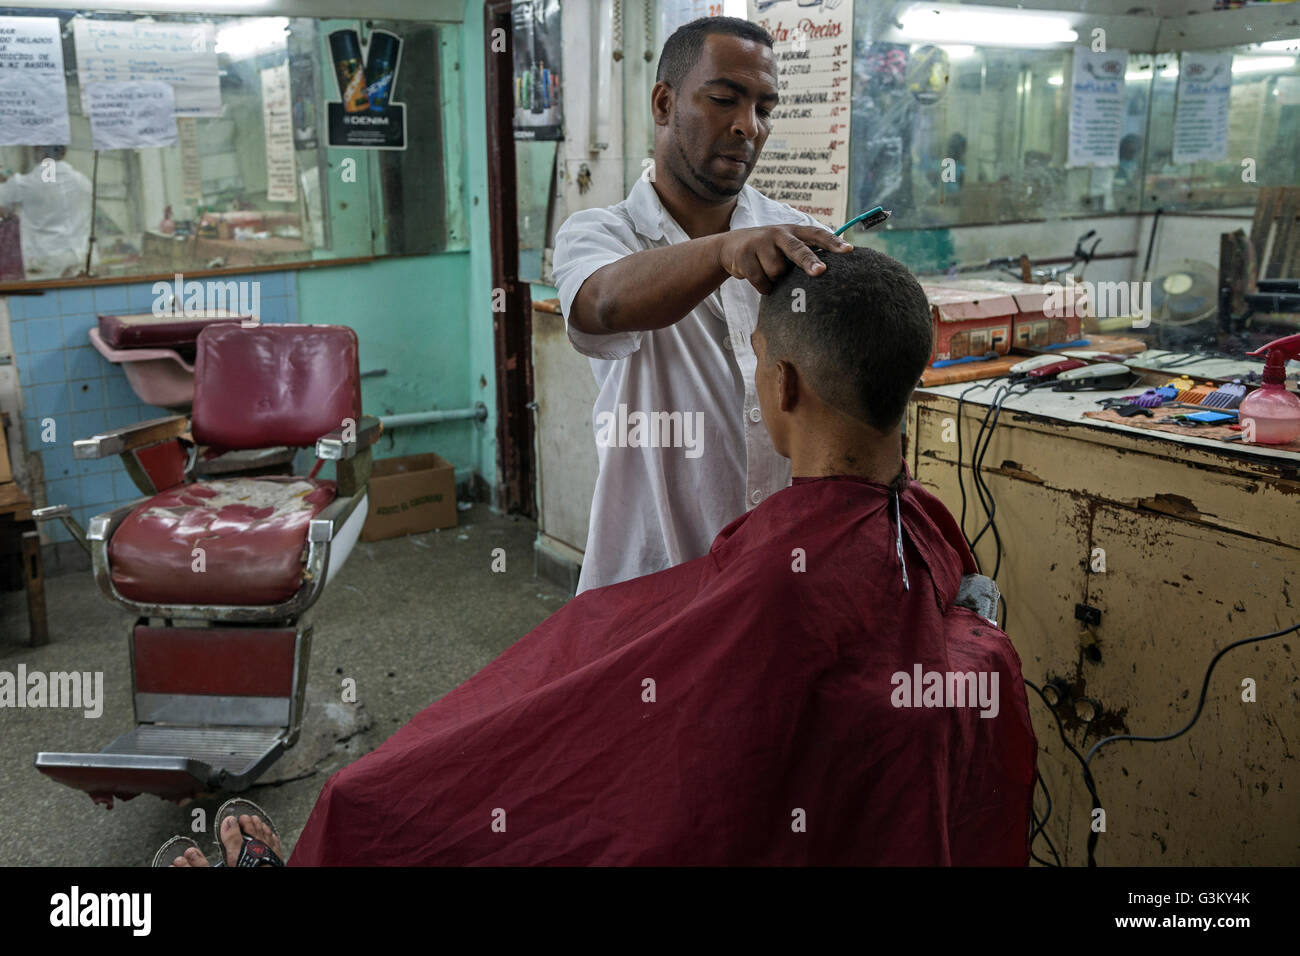 Hair salon, barber cutting hair, historic centre, Havana, Cuba Stock Photo